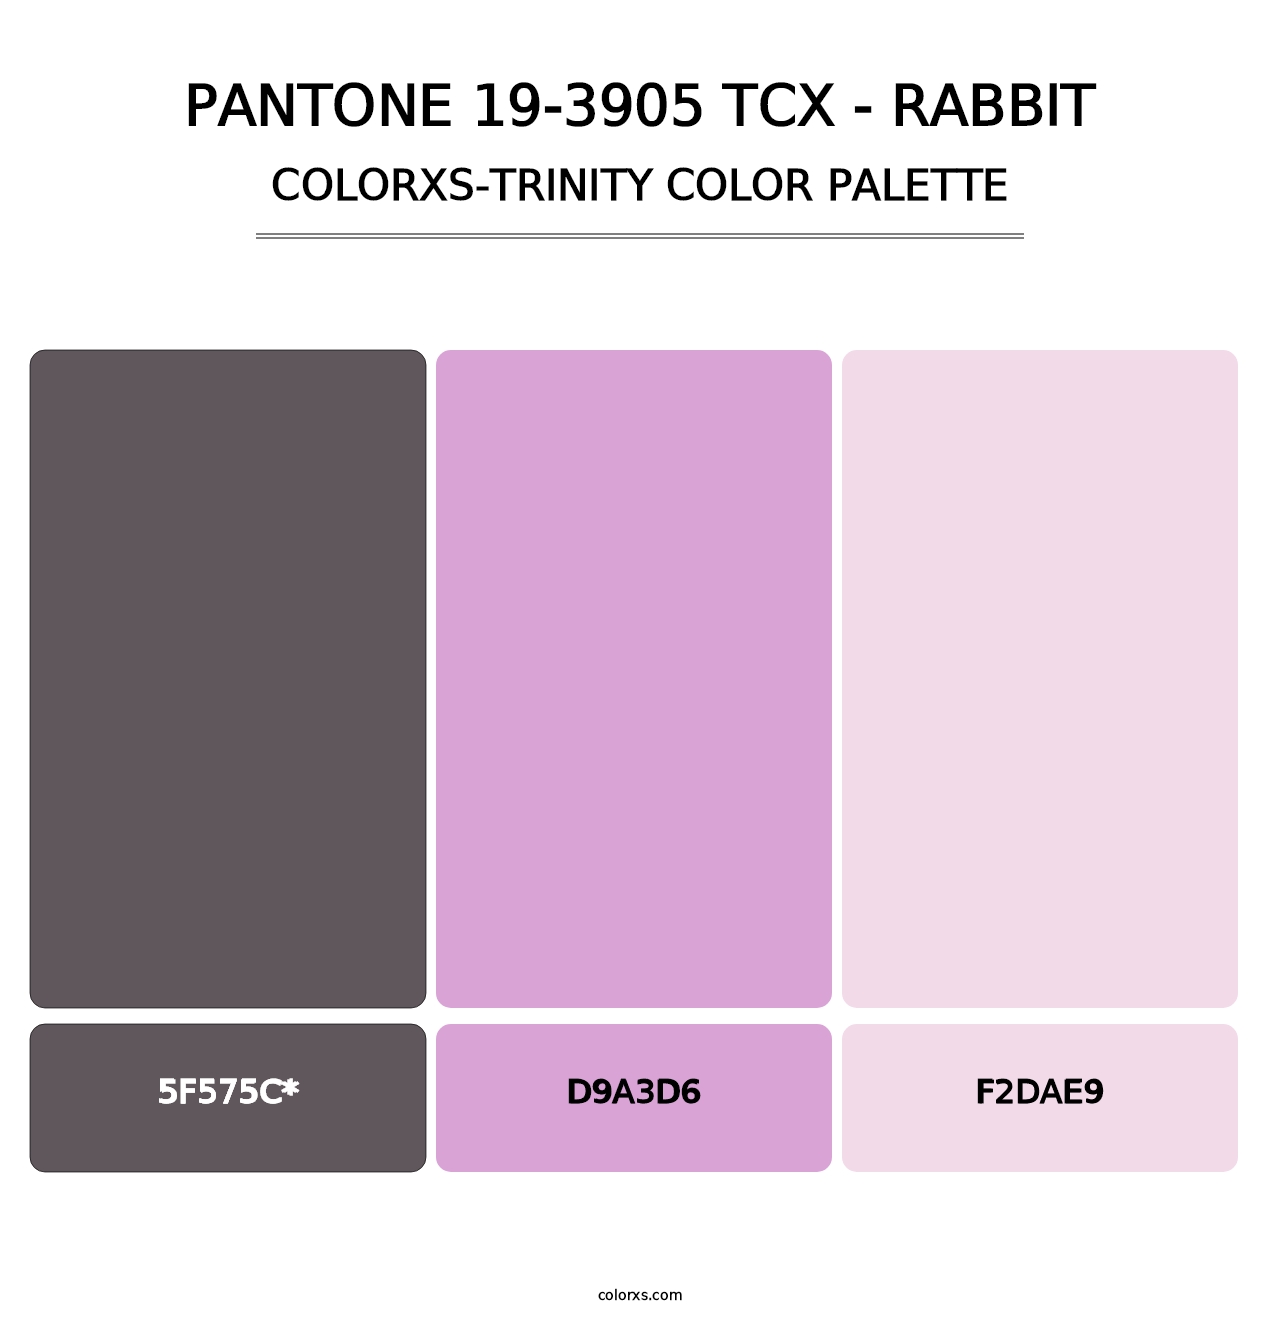 PANTONE 19-3905 TCX - Rabbit - Colorxs Trinity Palette